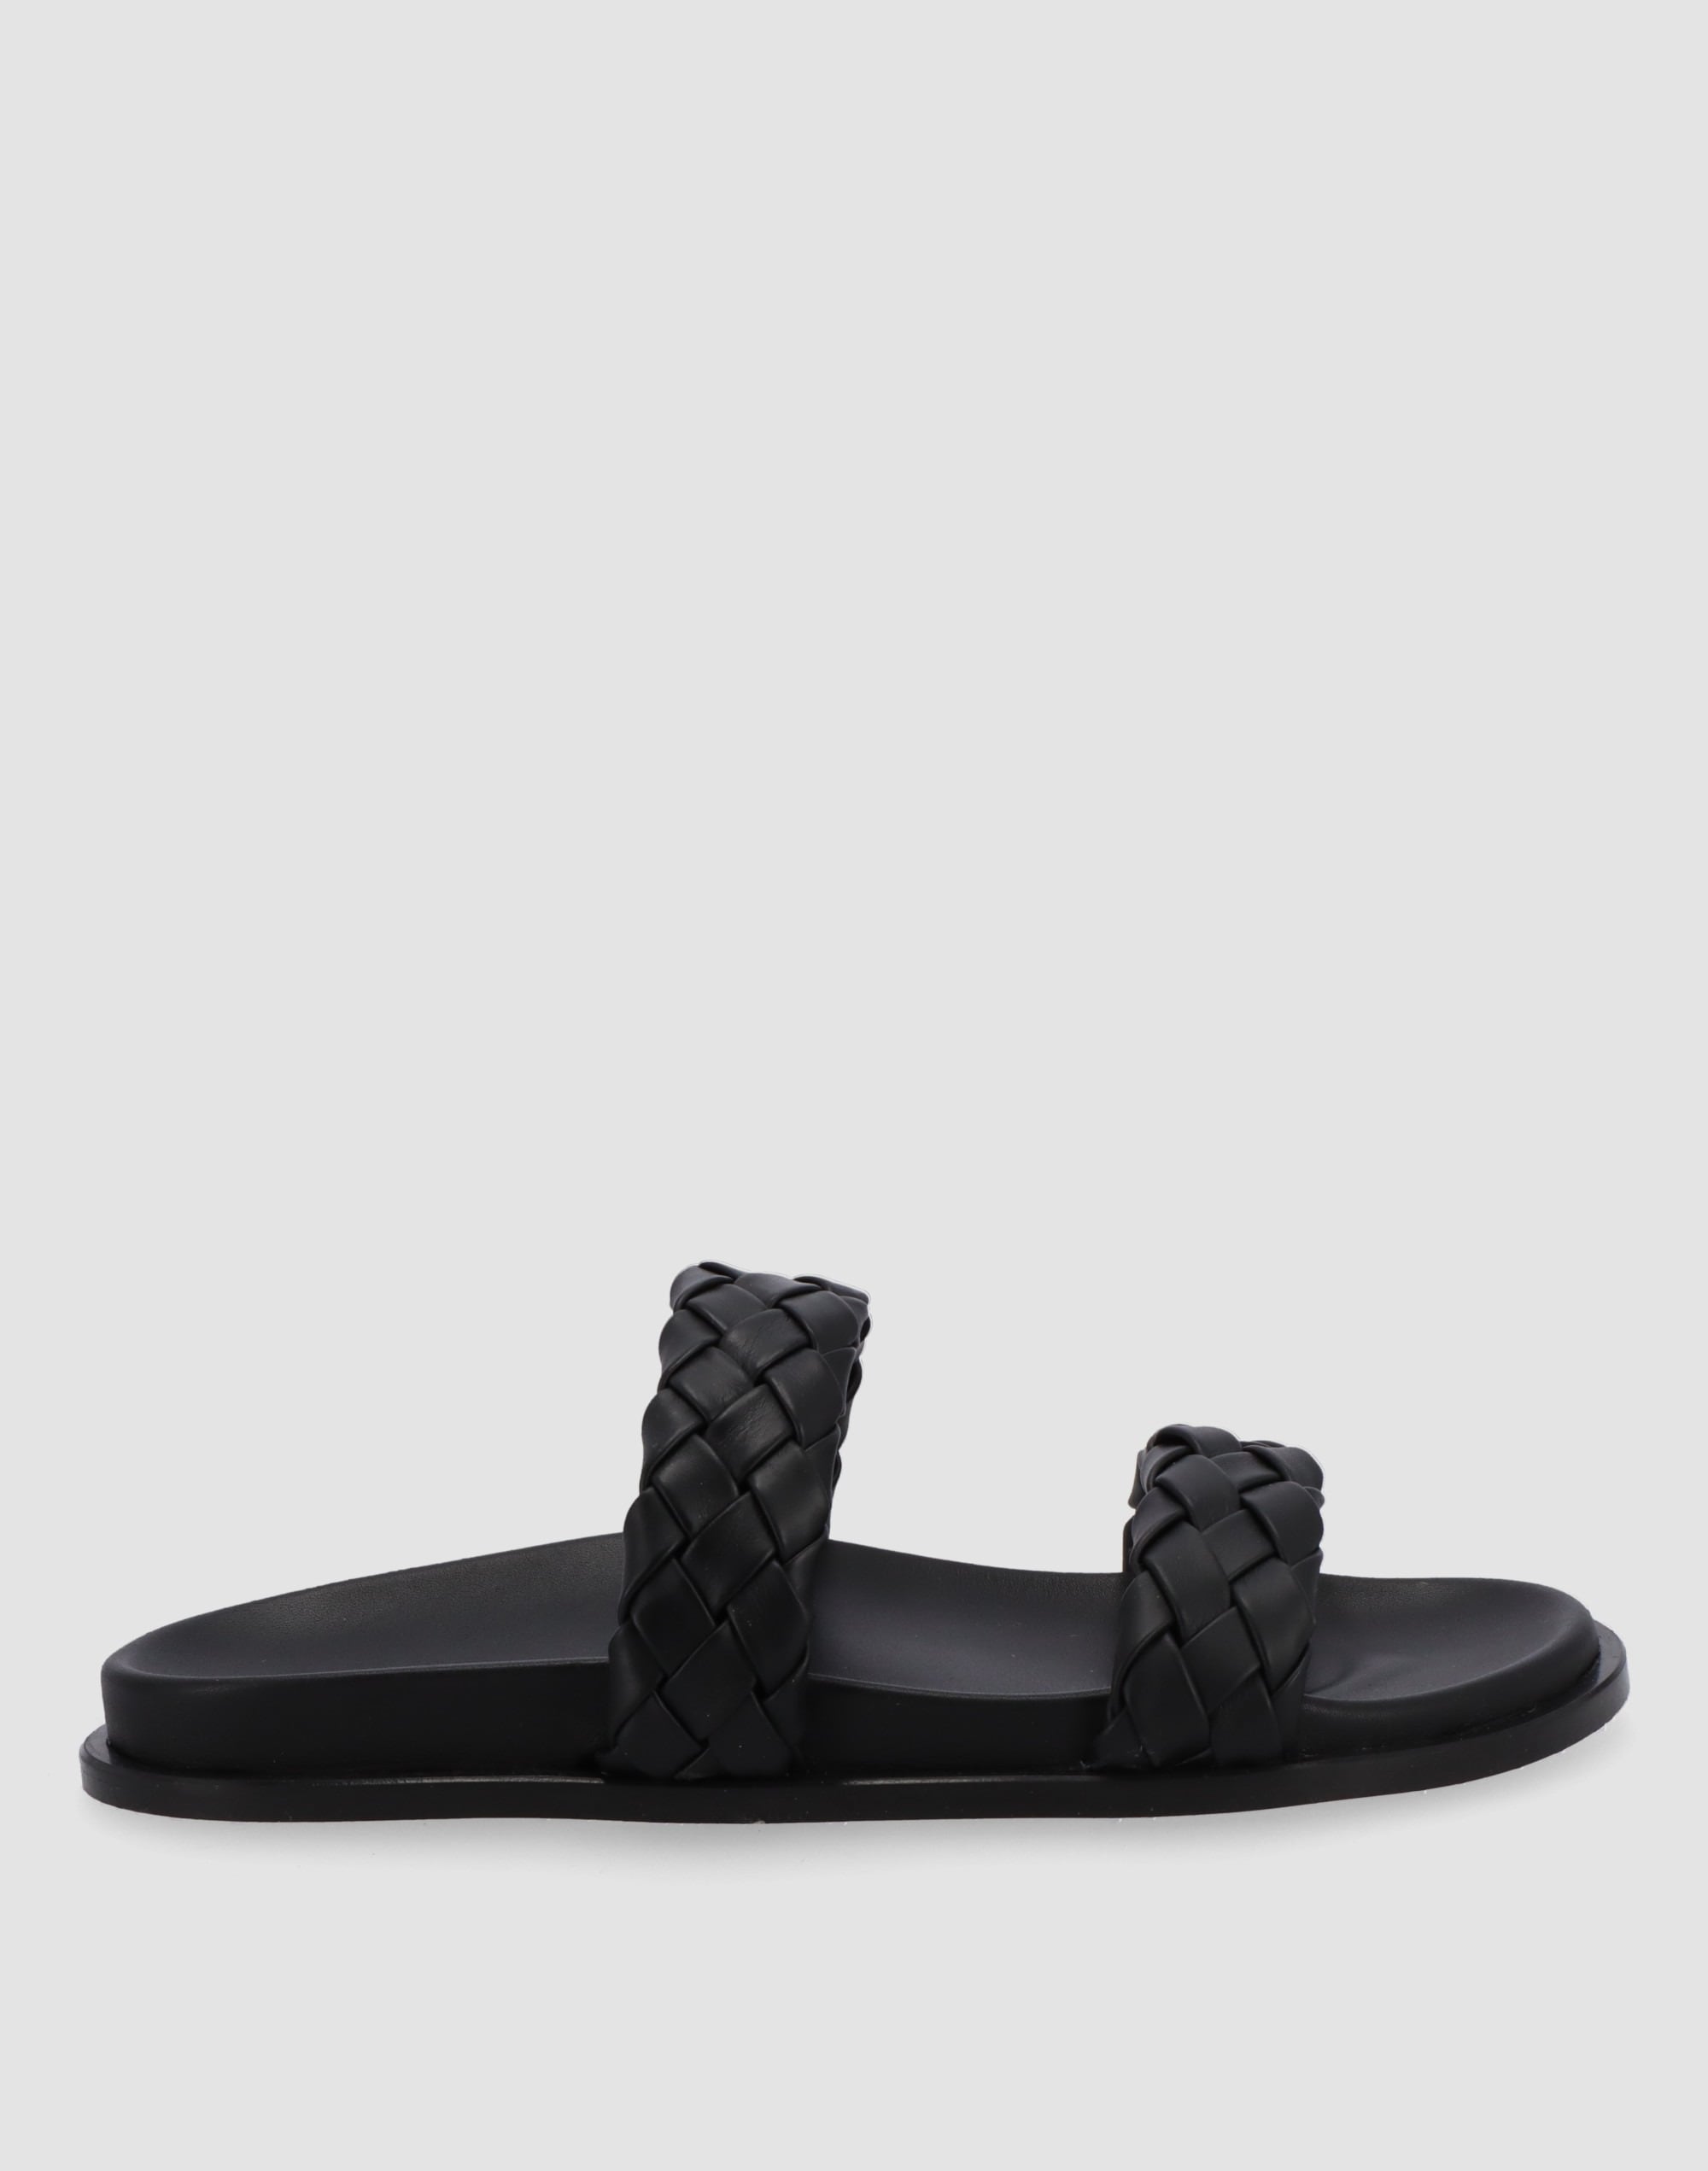 ALOHAS Calypso Braided Leather Sandals